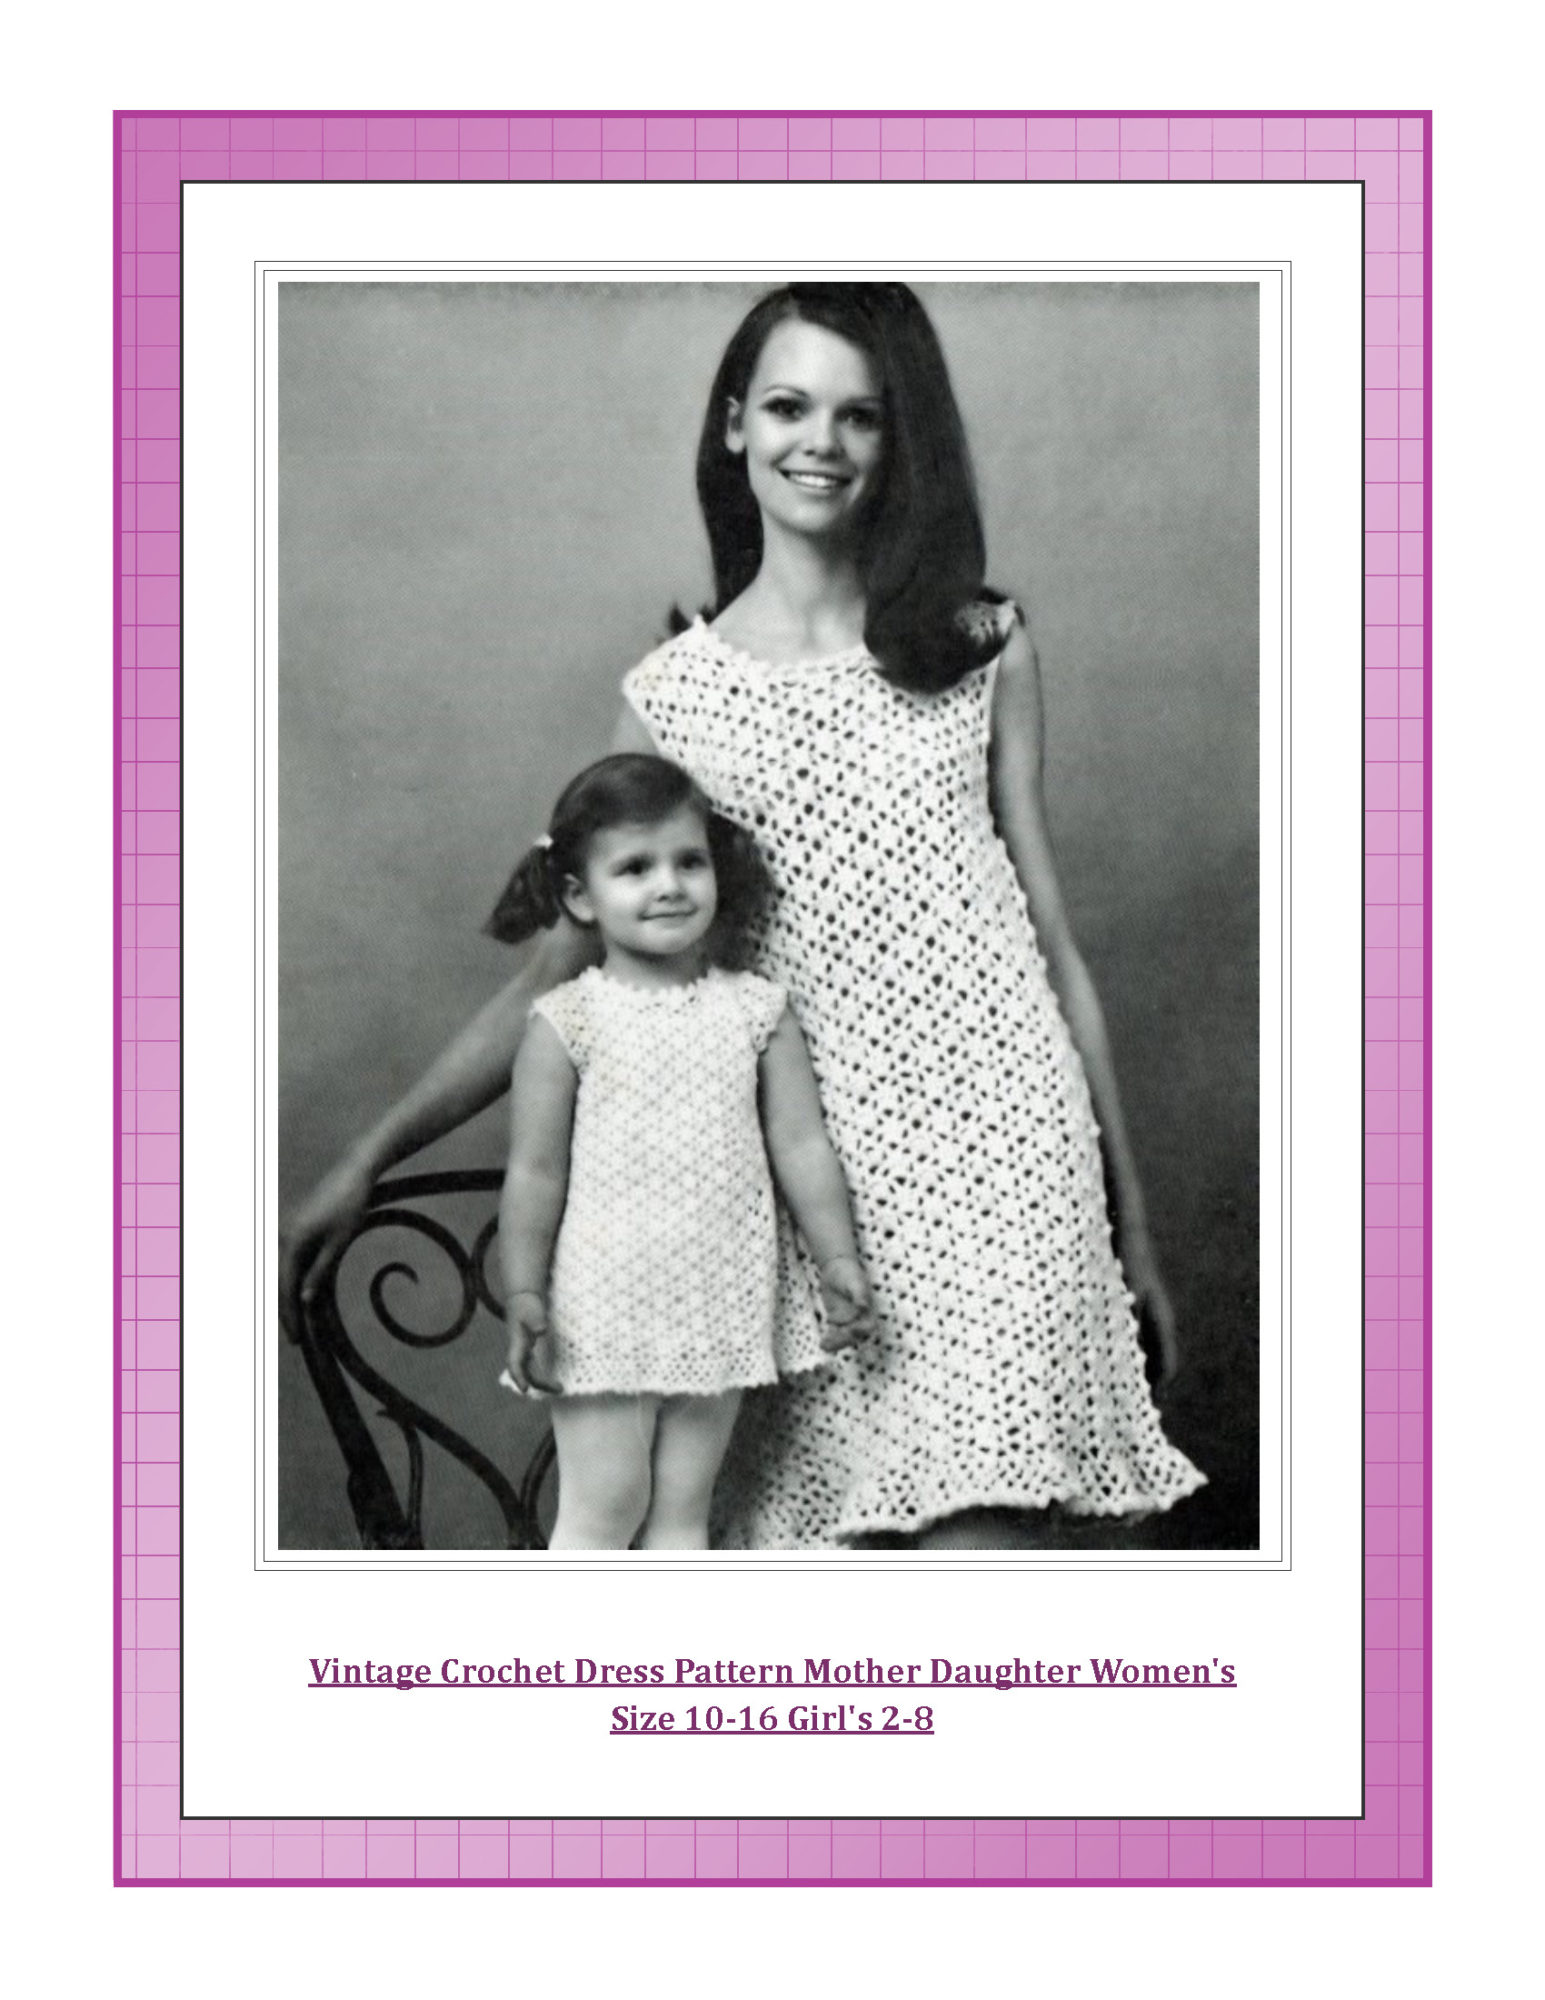 Vintage Crochet Dress Pattern Mother Daughter Women's Size 10-16 Girl's 2-8